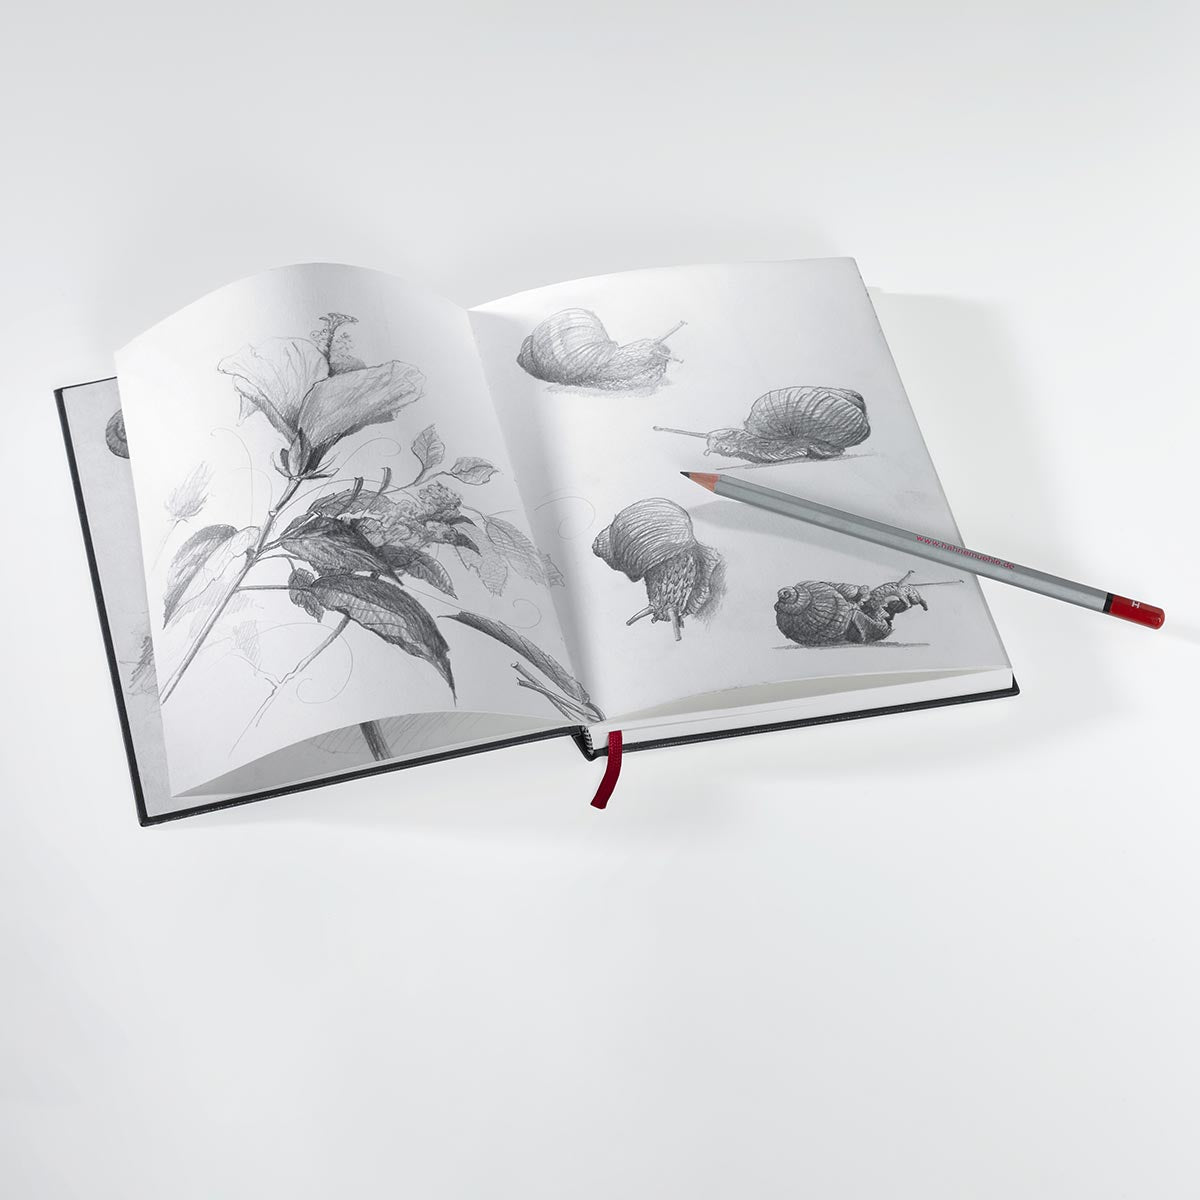 Hahnemuhle - Nostalgie Sketch Book - A4 190GSM - Porträt